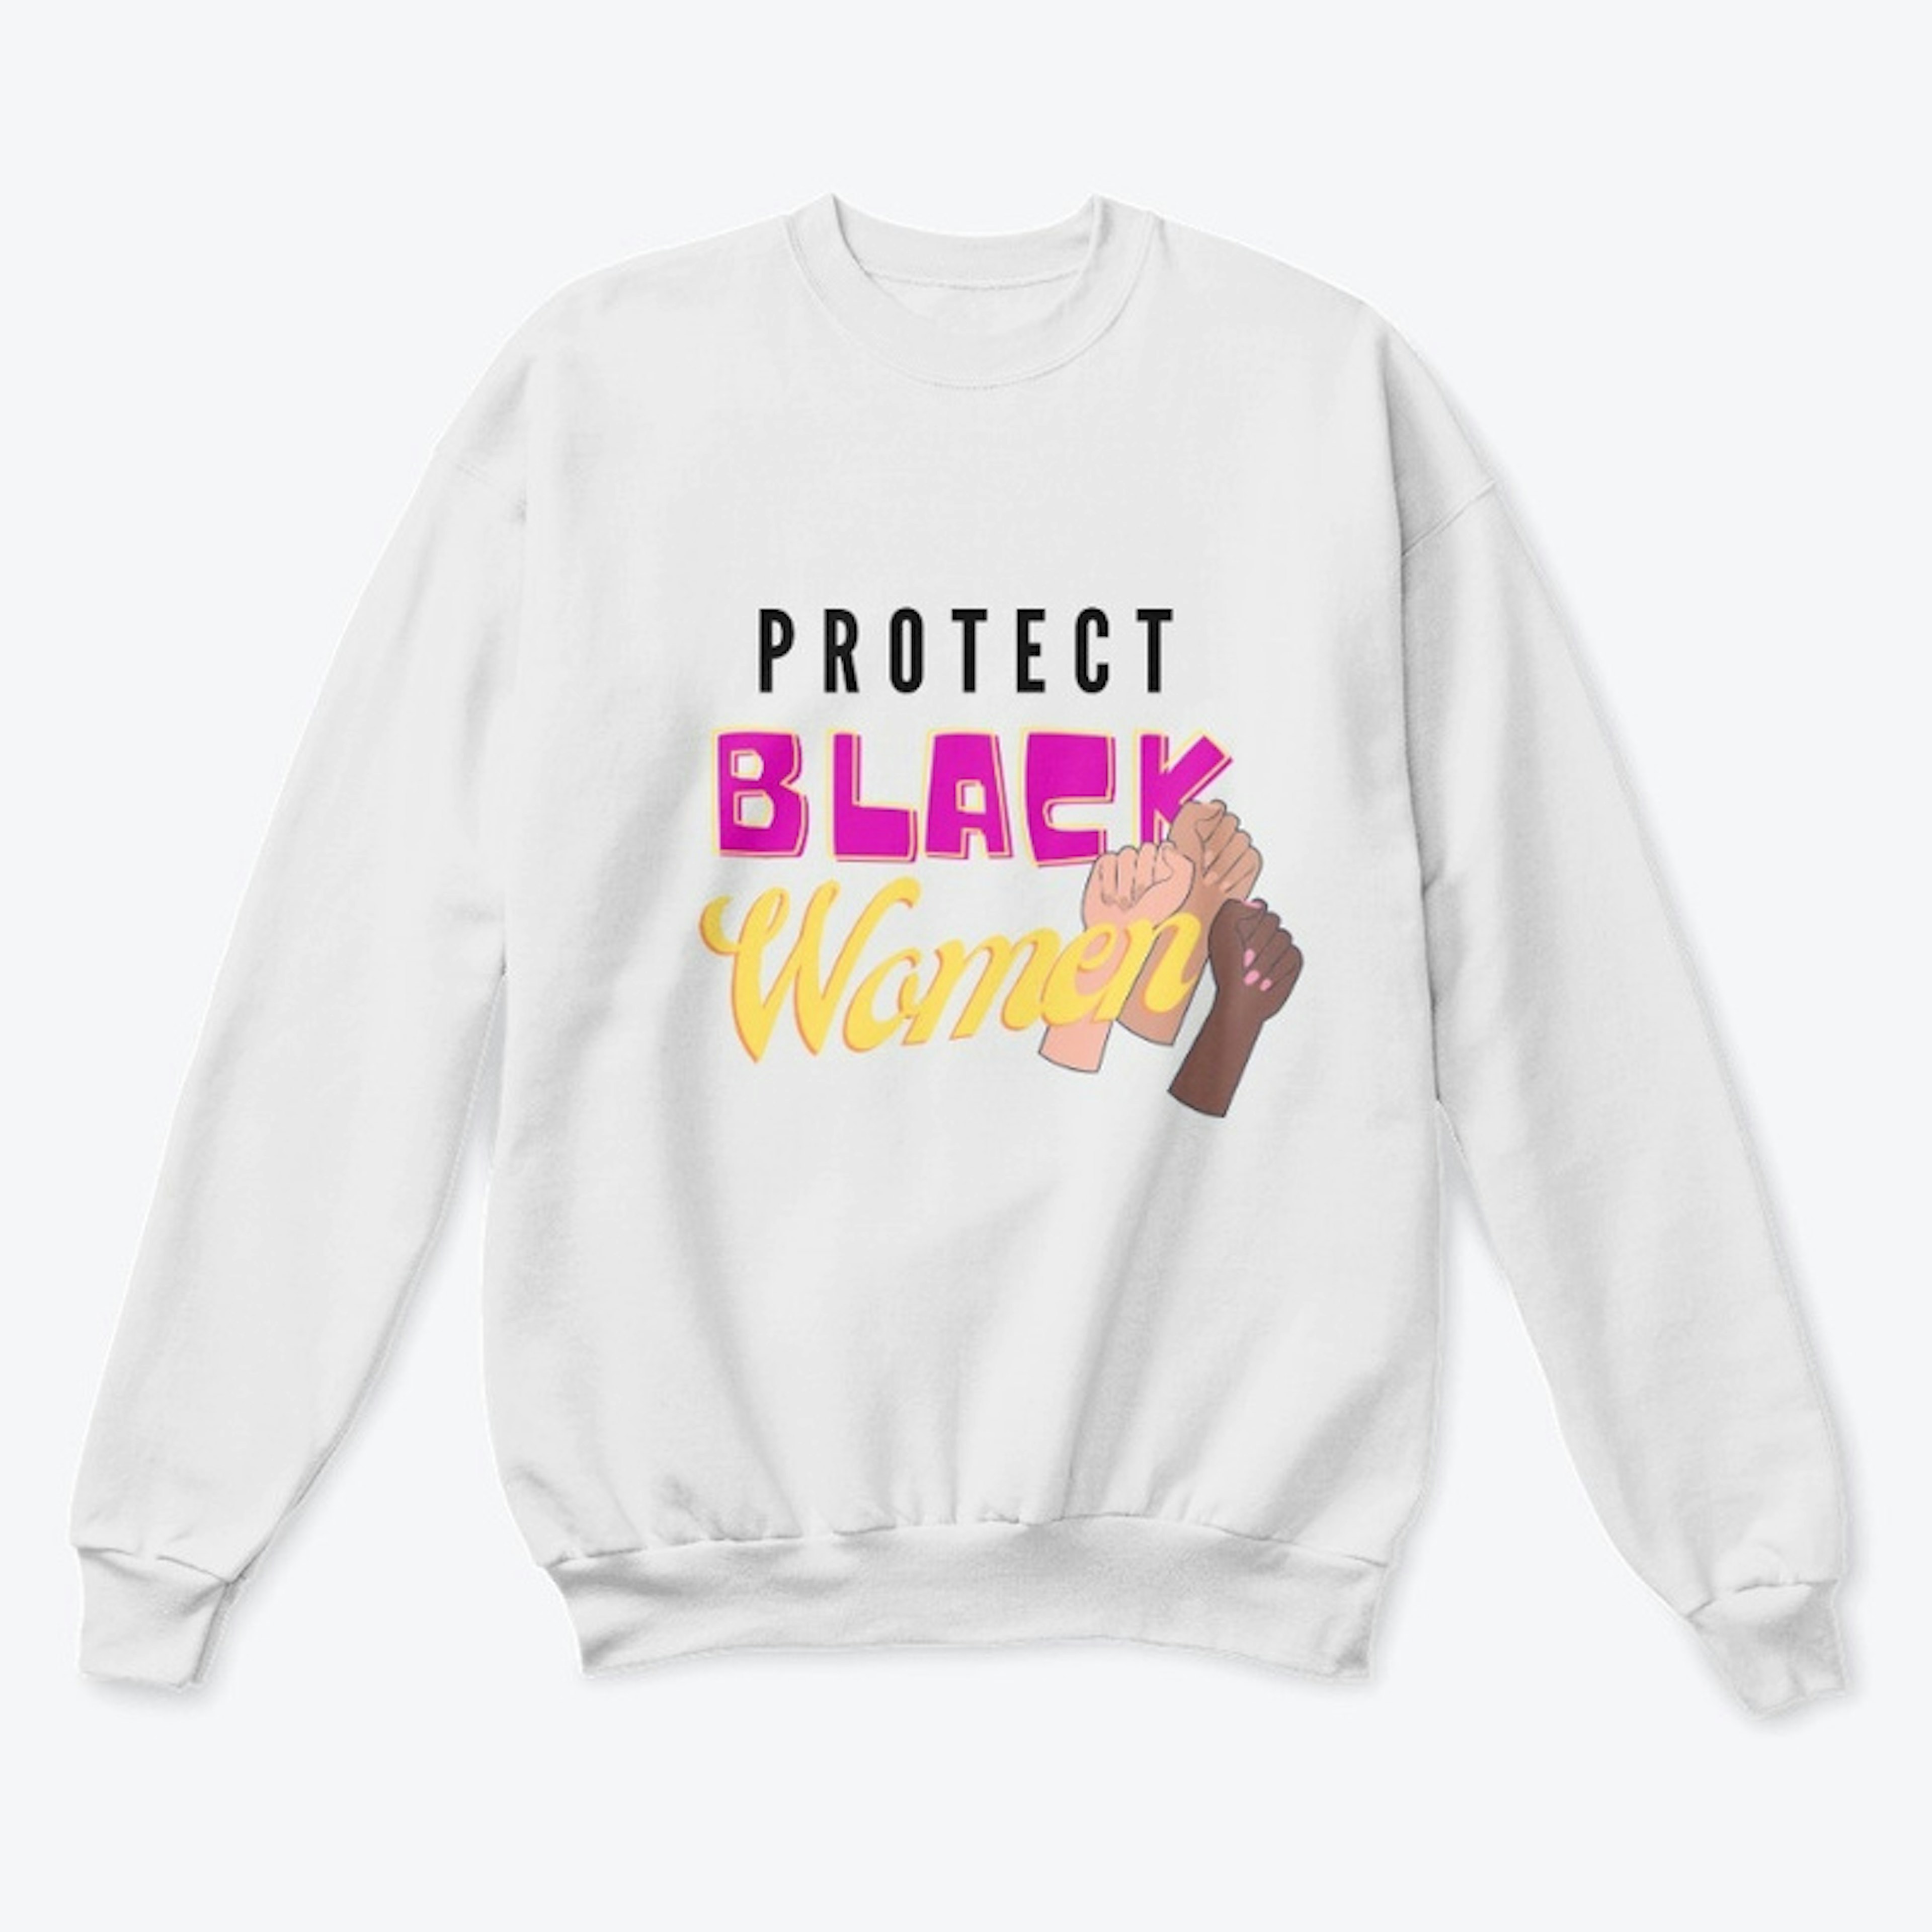 PROTECT BLACK WOMEN Fists (blk)